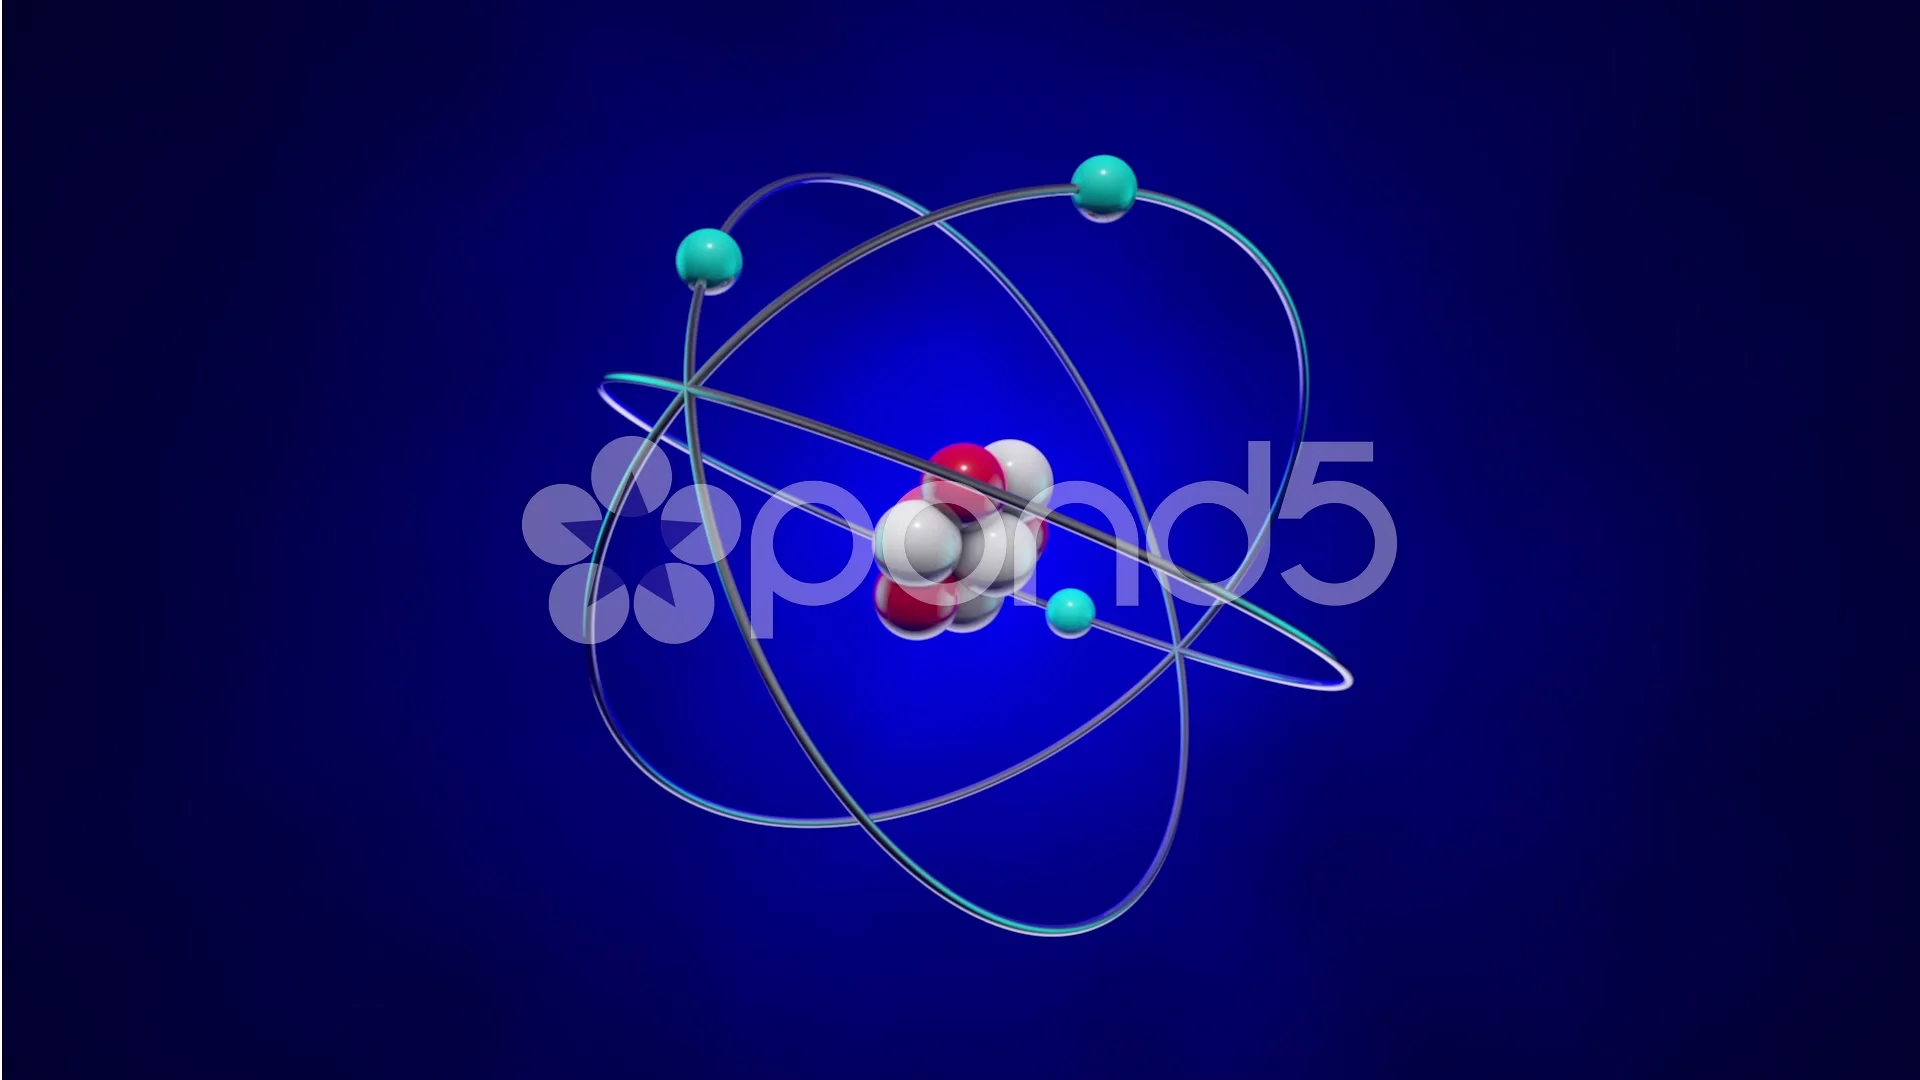 Atom animation | Stock Video | Pond5